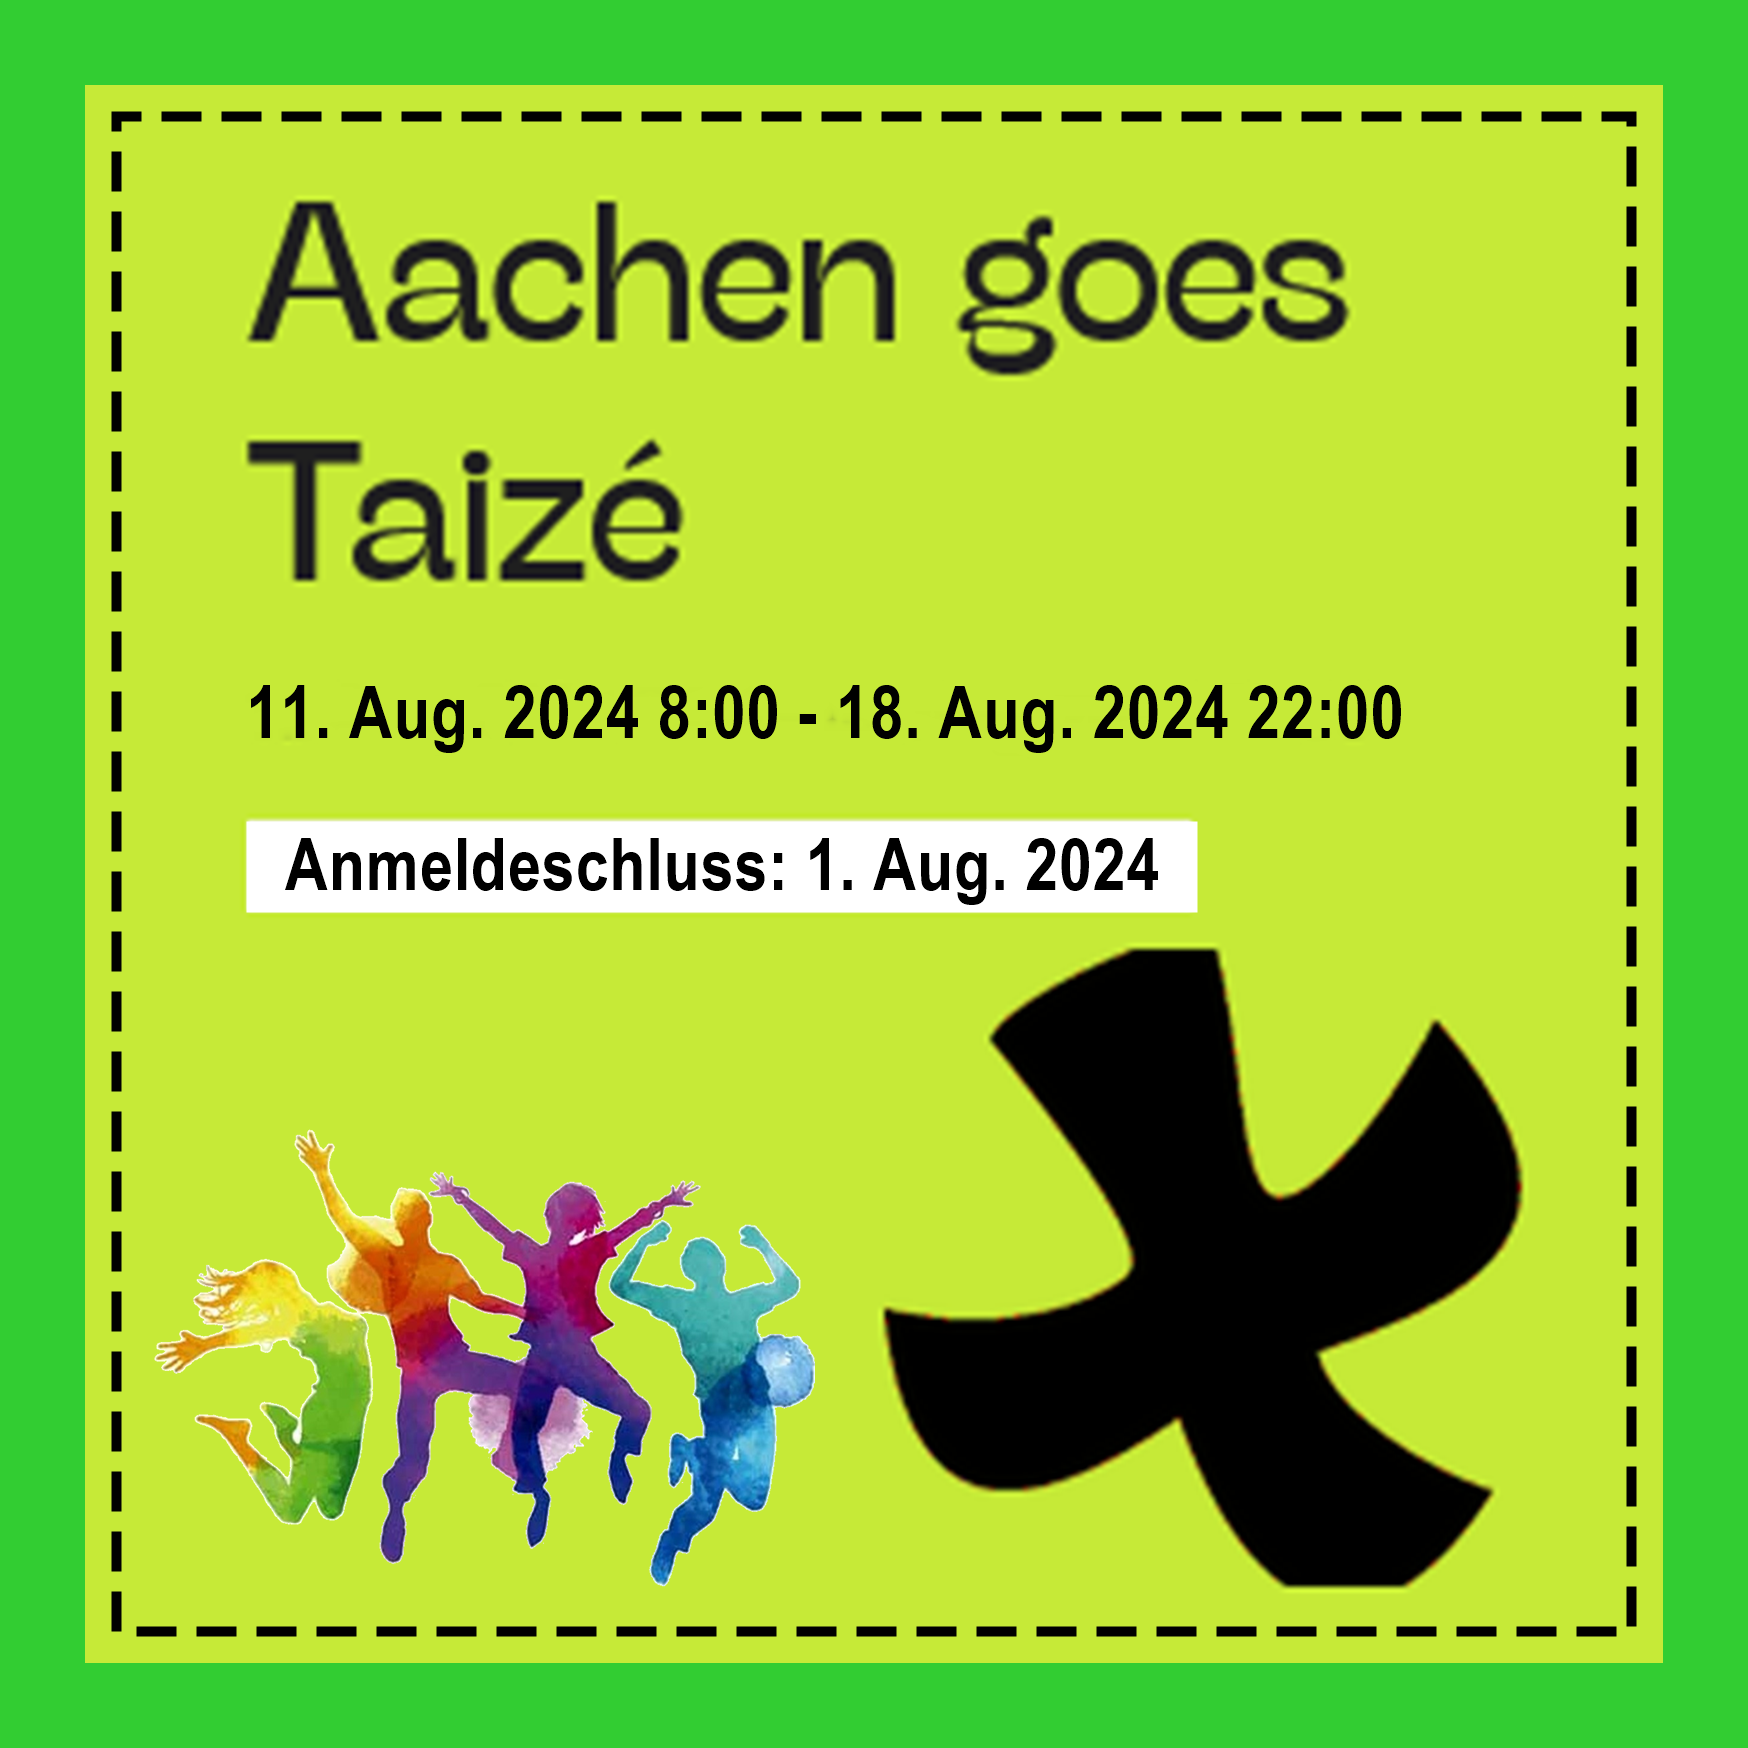 Aachen goes Taizé 2024 (c) CuF